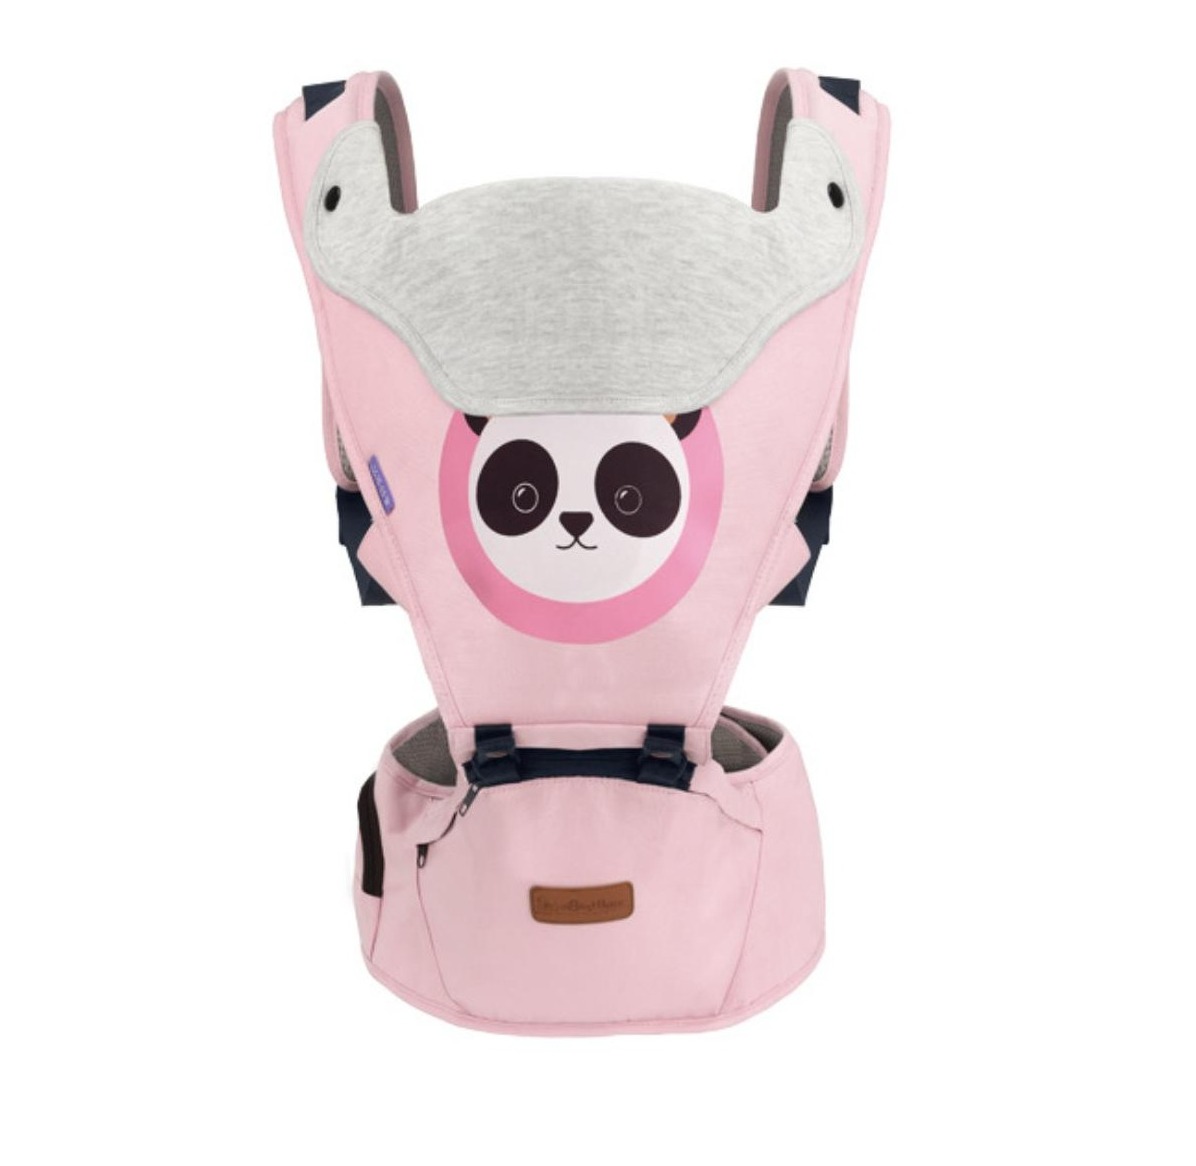 Best Baby เป้อุ้มเด็ก Baby Carriers Backpack Hipseat 4in1 สามารถนั่งและนอนได้ สะพายหน้าและสะพายหลังได้ (แรกเกิด-3ปี)/สีชมพู